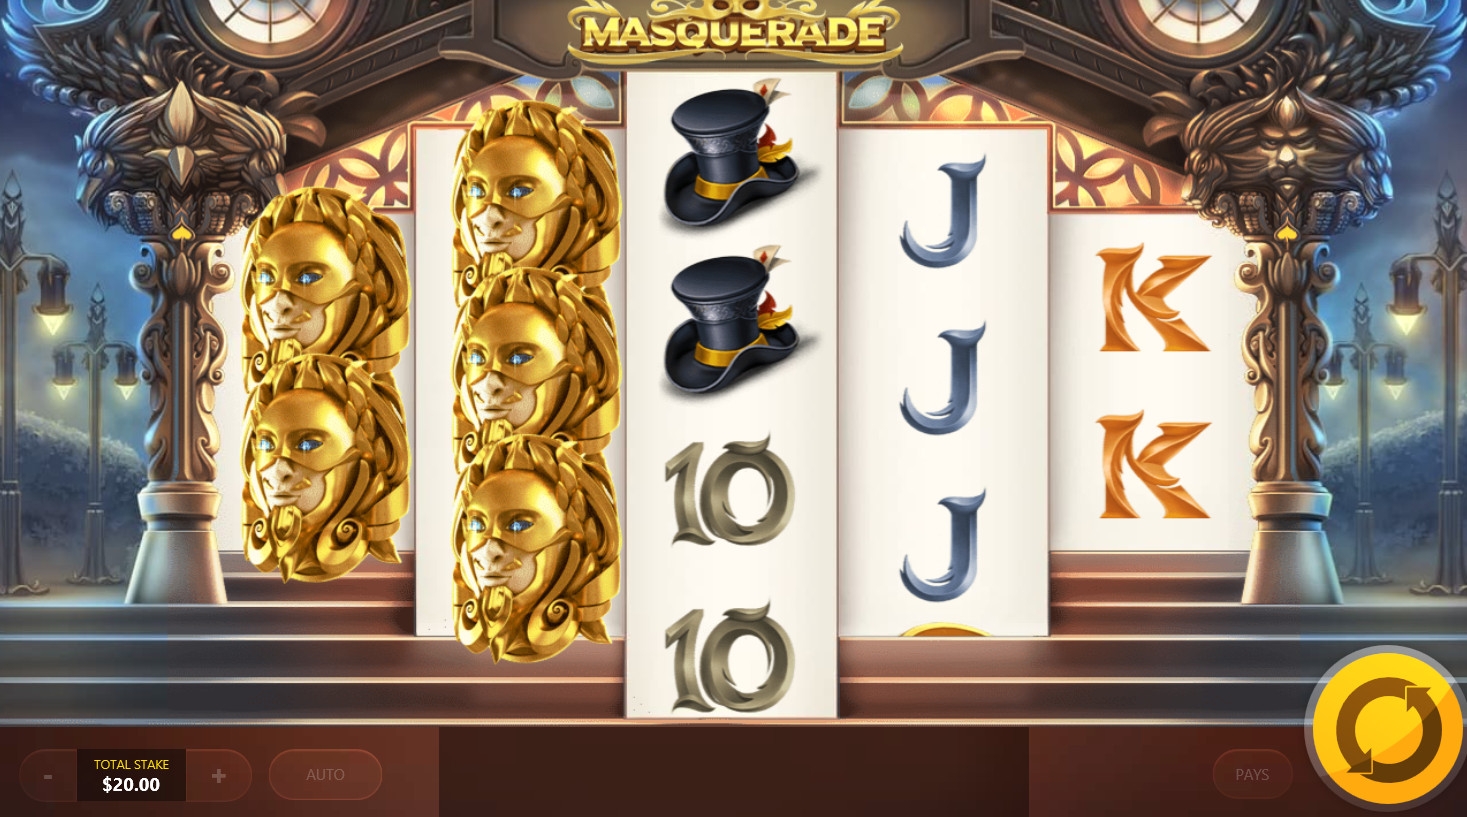 Masquerade (Masquerade) from category Slots